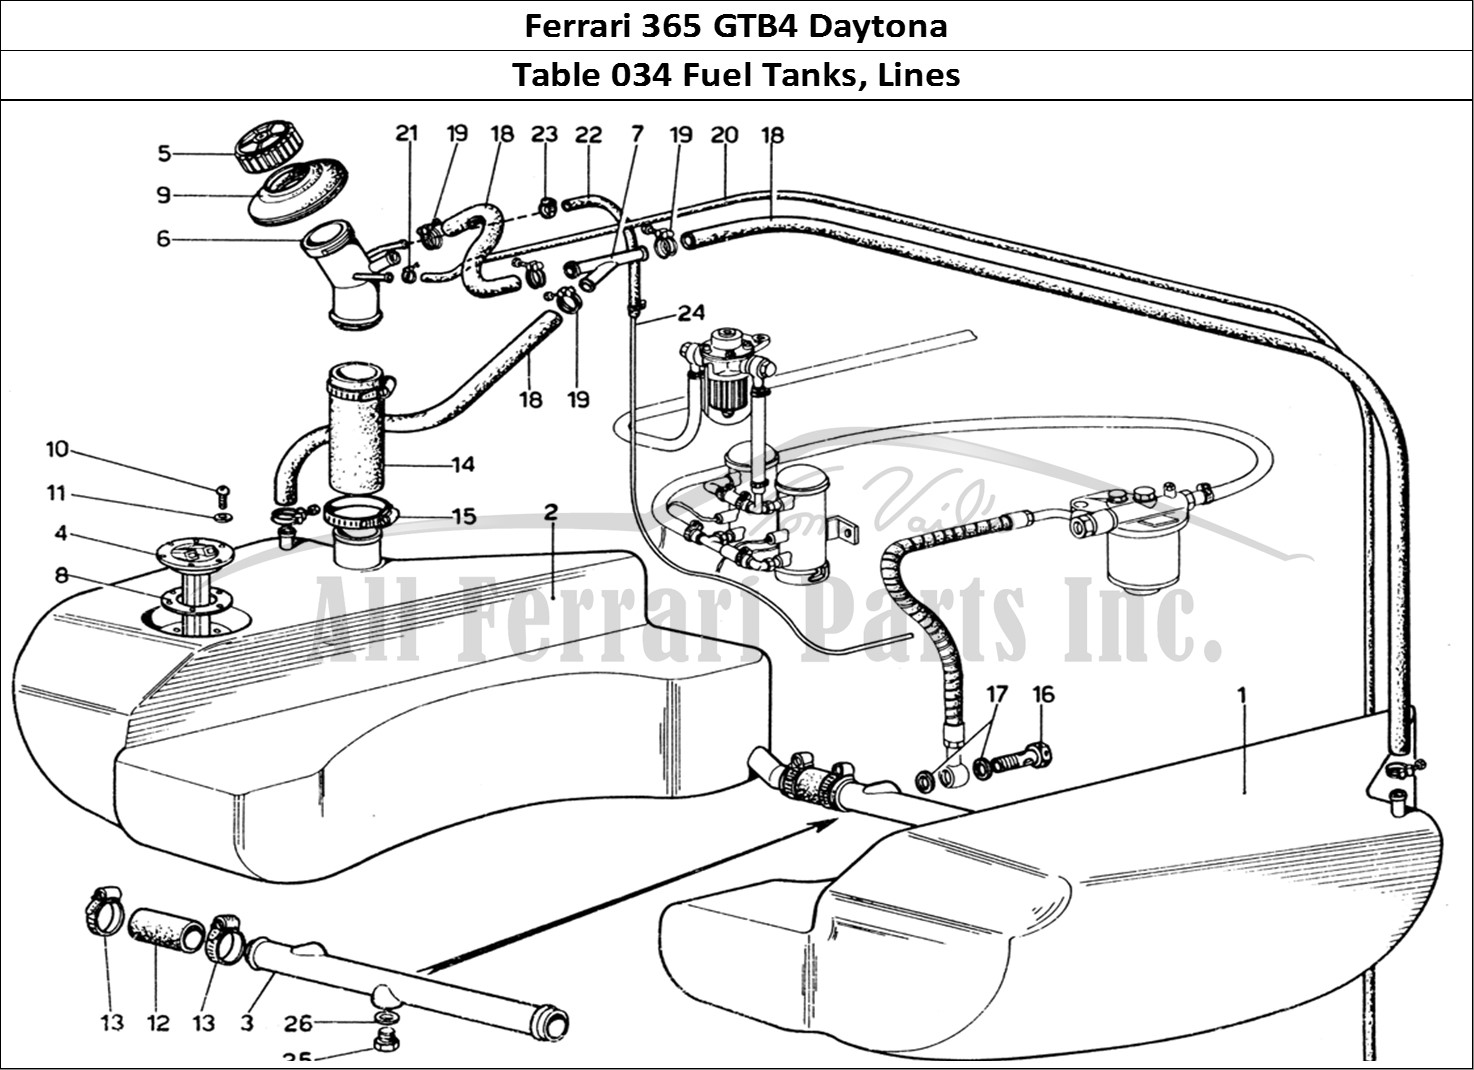 Ferrari Parts Ferrari 365 GTB4 Daytona (1969) Page 034 Fuel Tanks & Piping